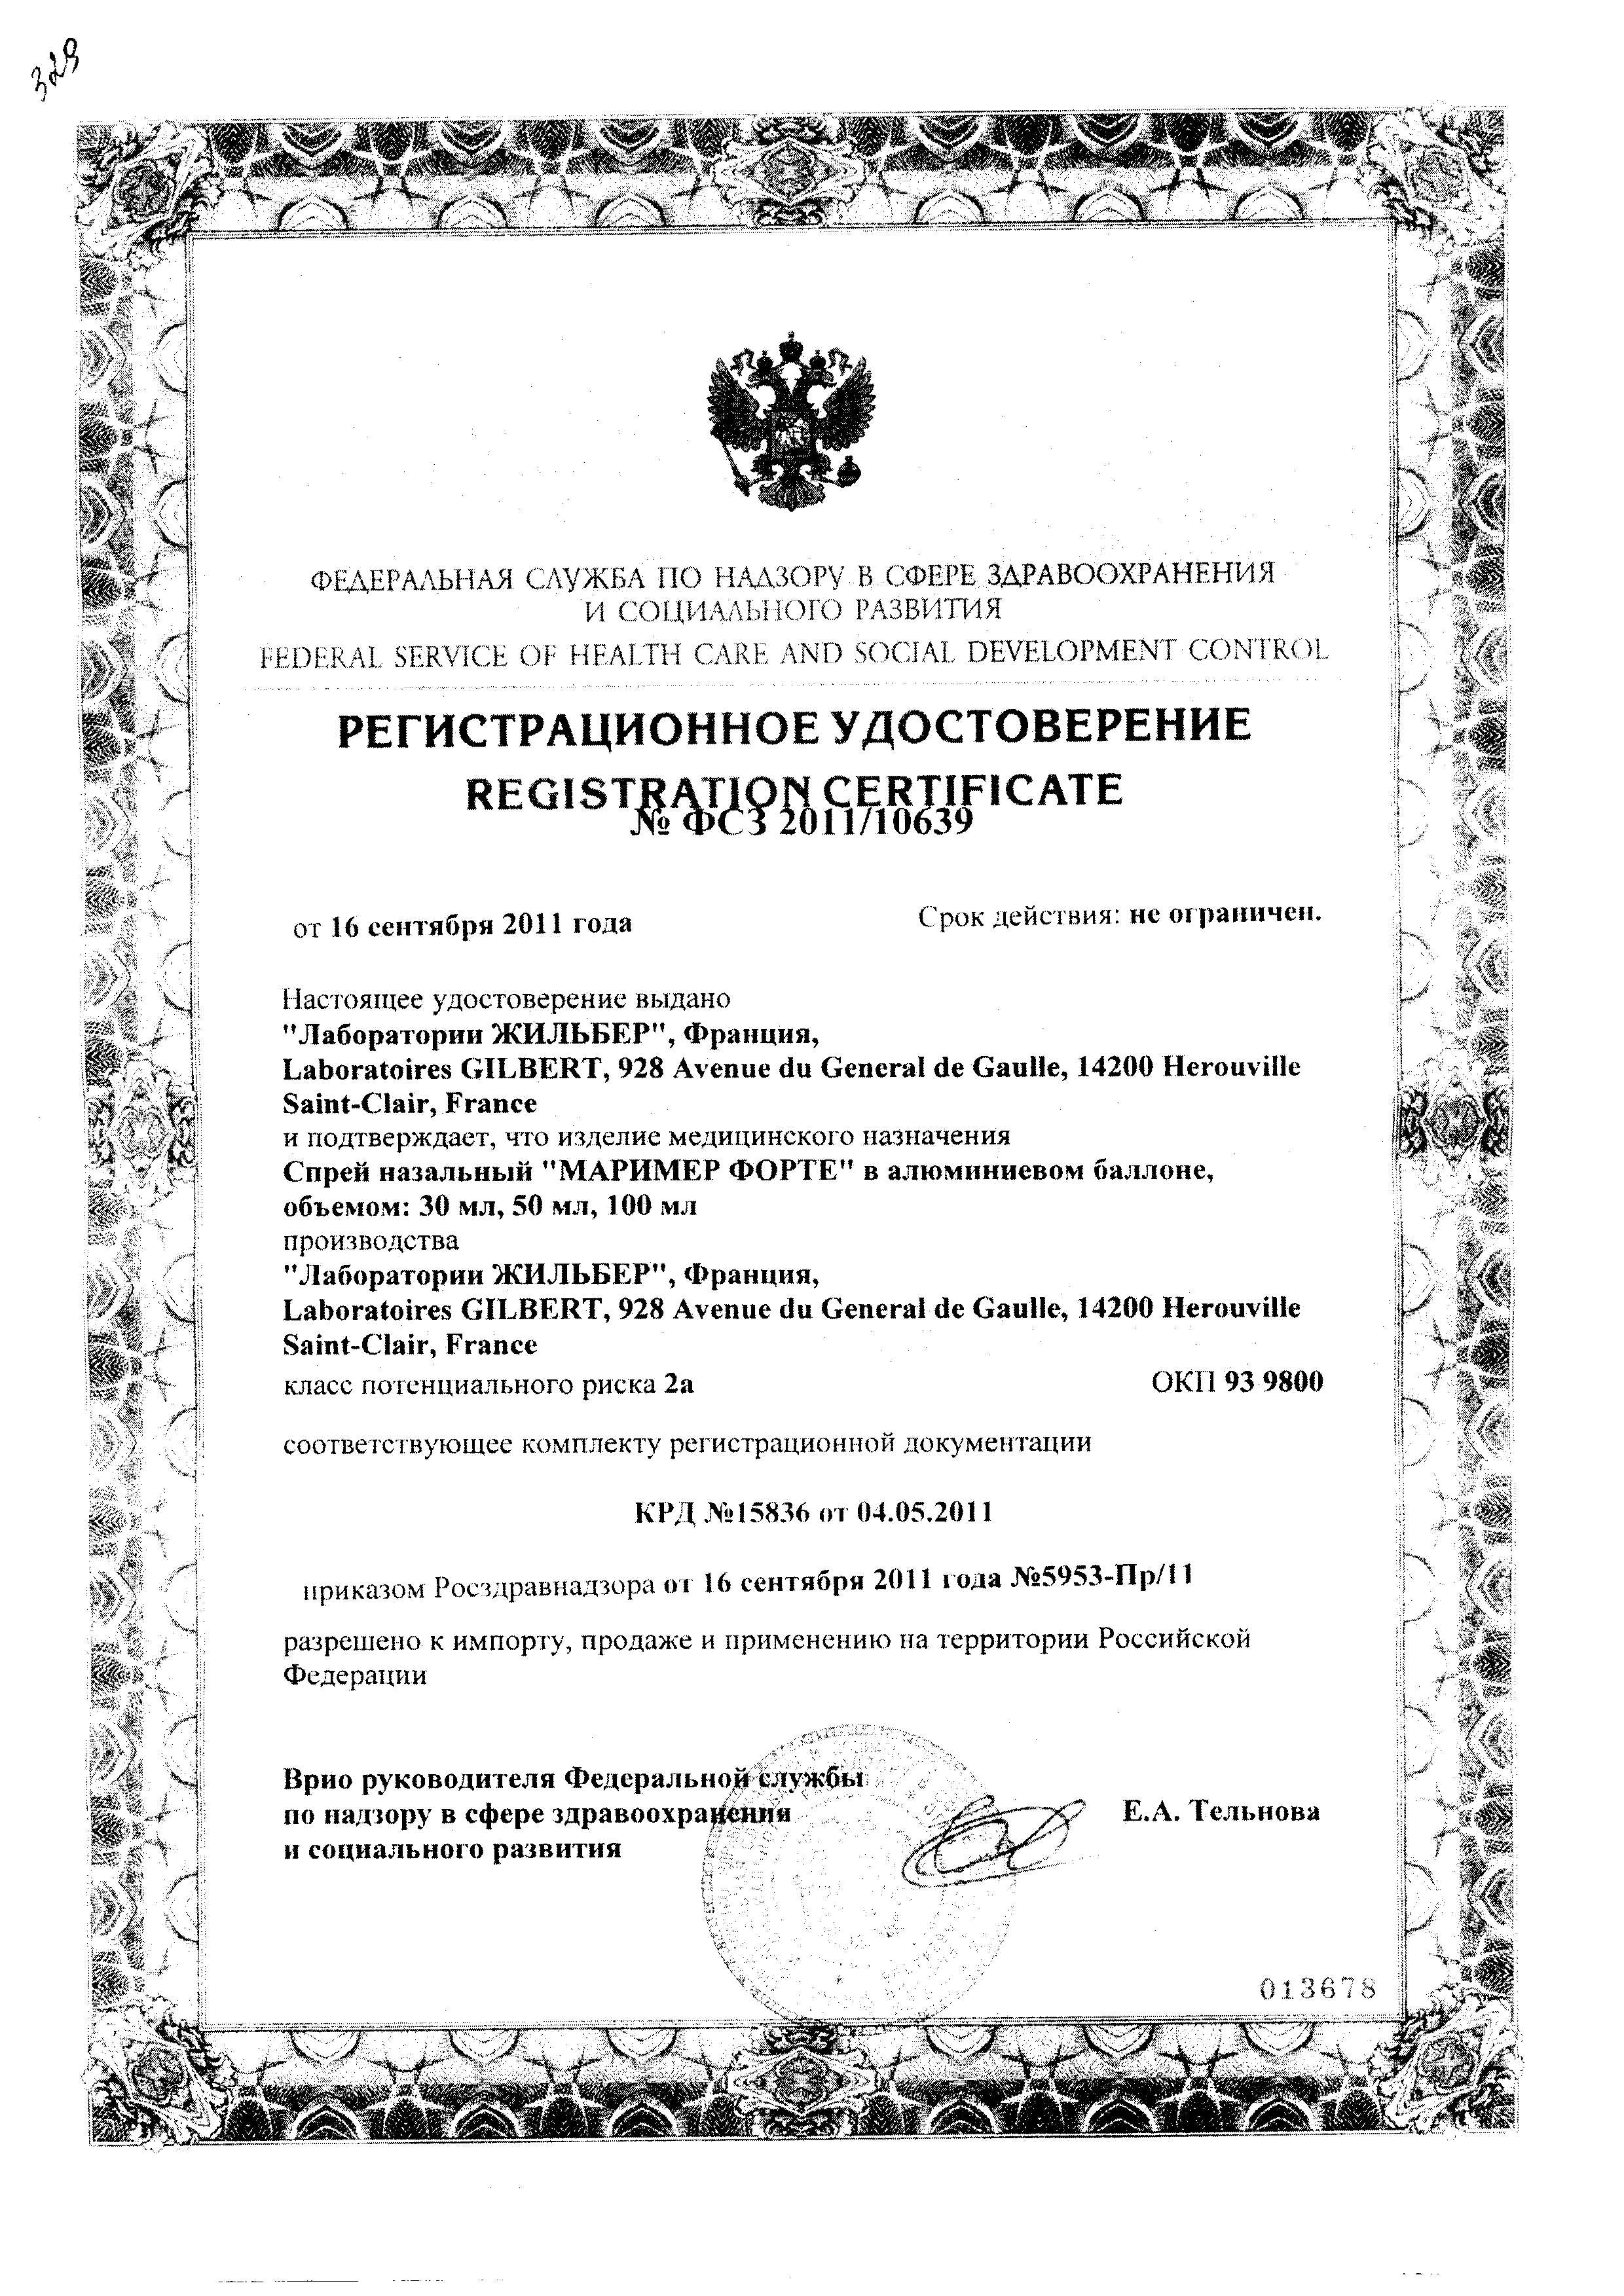 Маример Форте сертификат